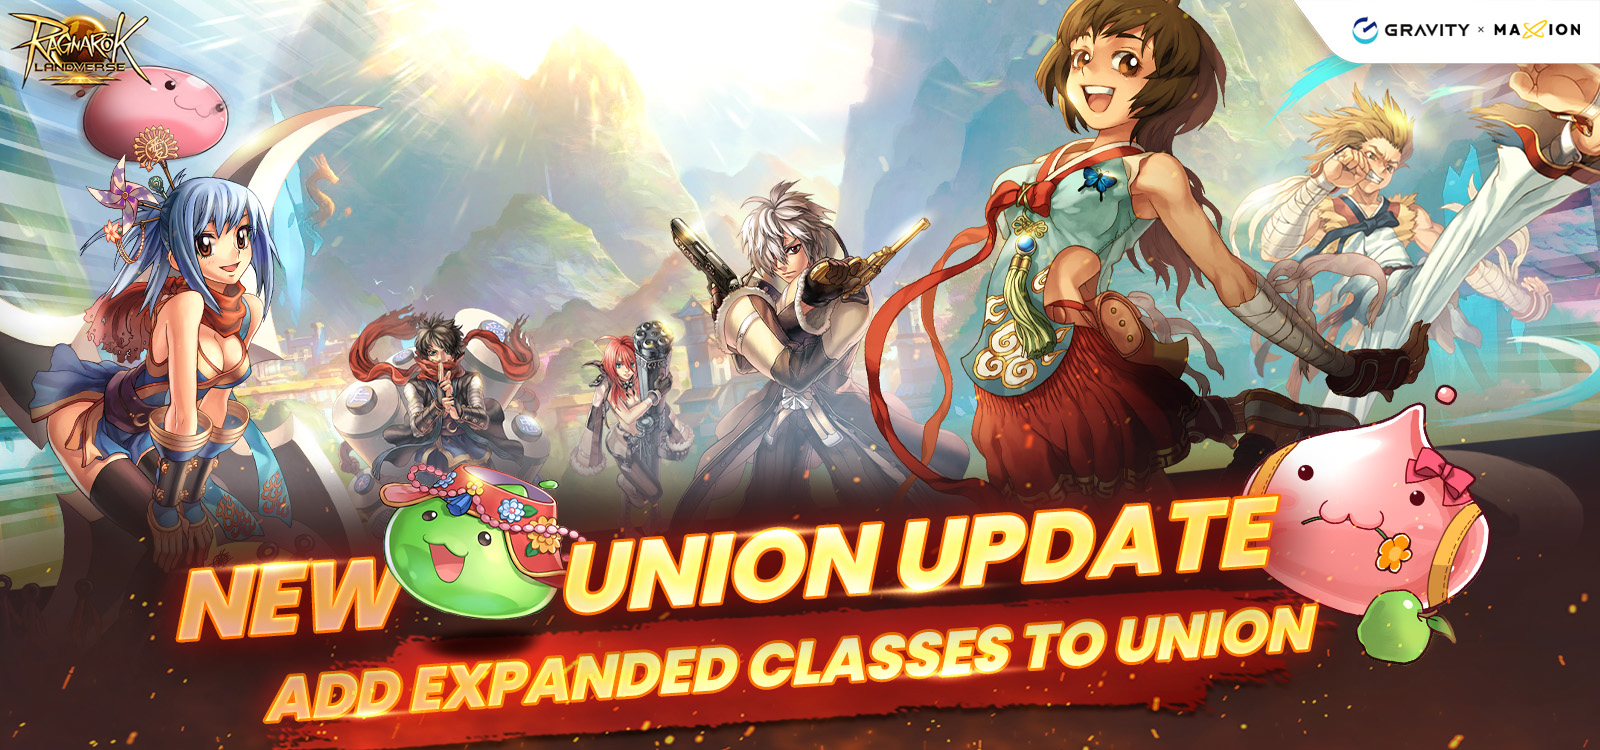 Ragnarok Landverse Added Expanded Classes to Union System.